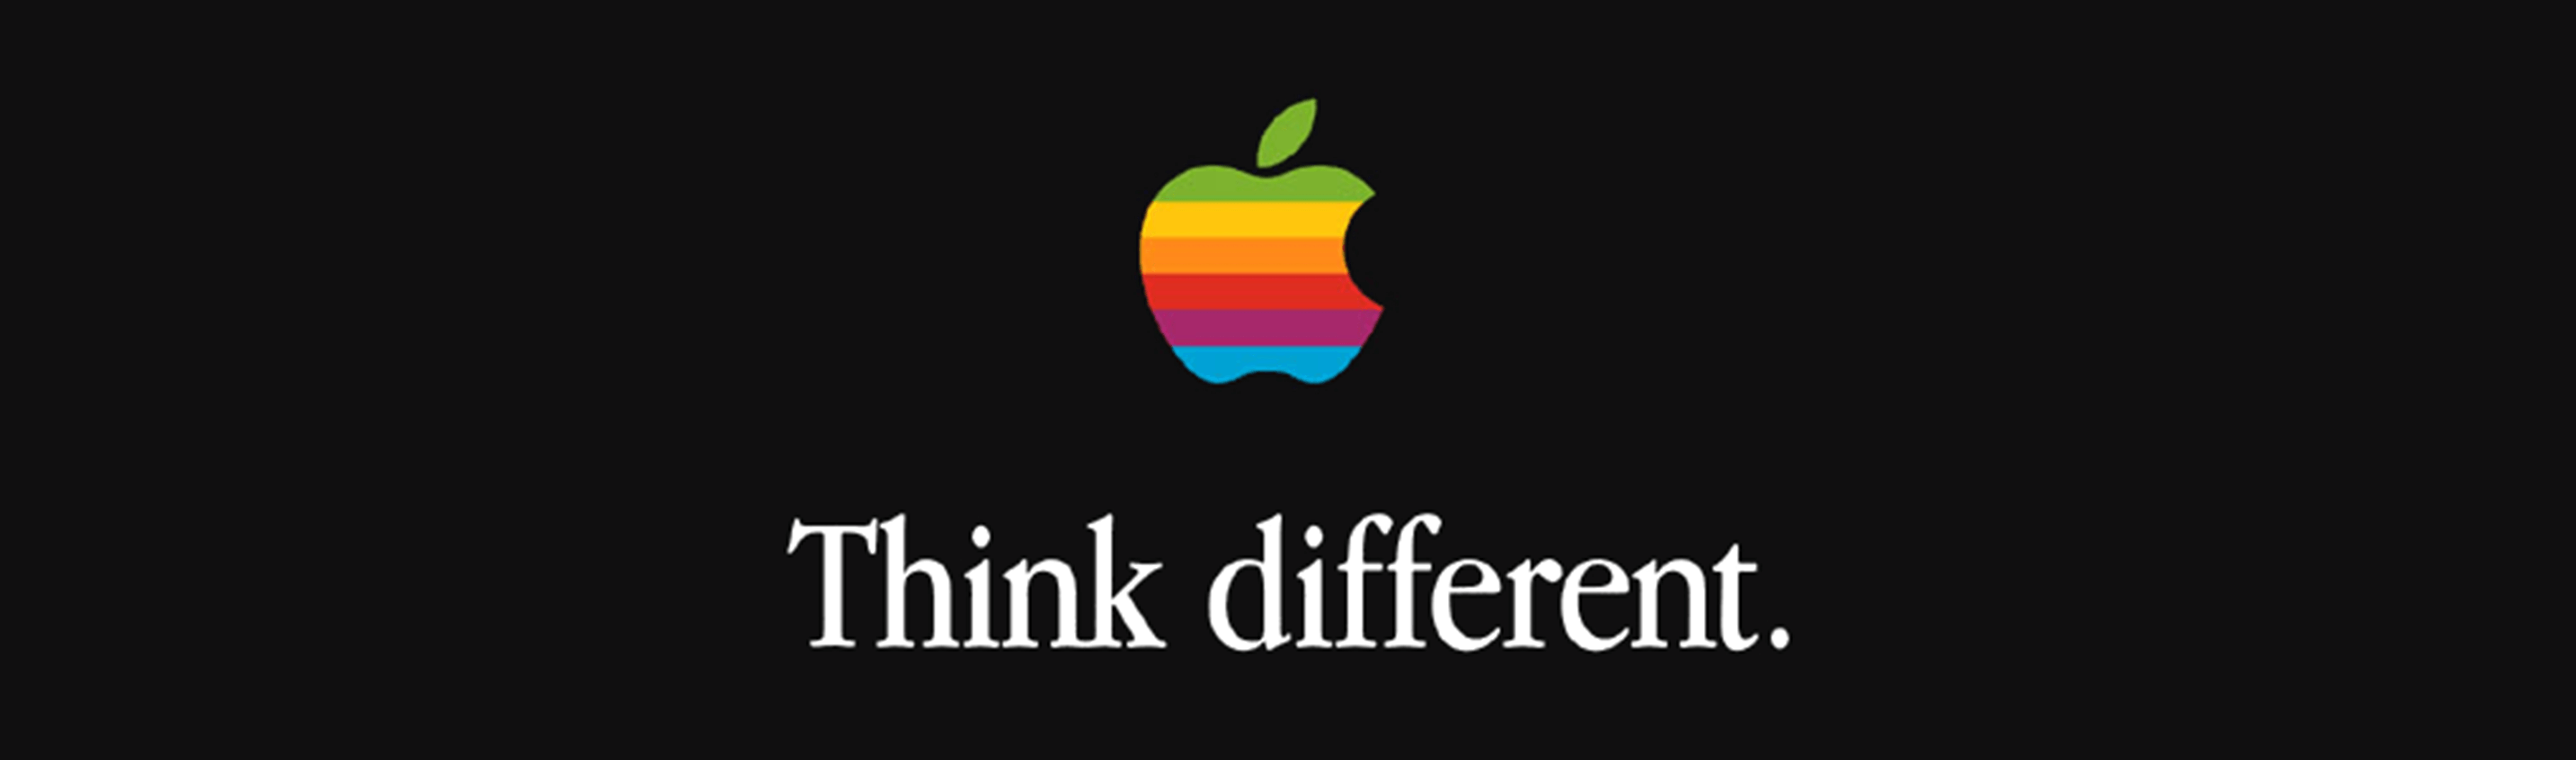 Different Apple Logo - Marketing Icons: The Apple Logo - AMA New York Capital Region